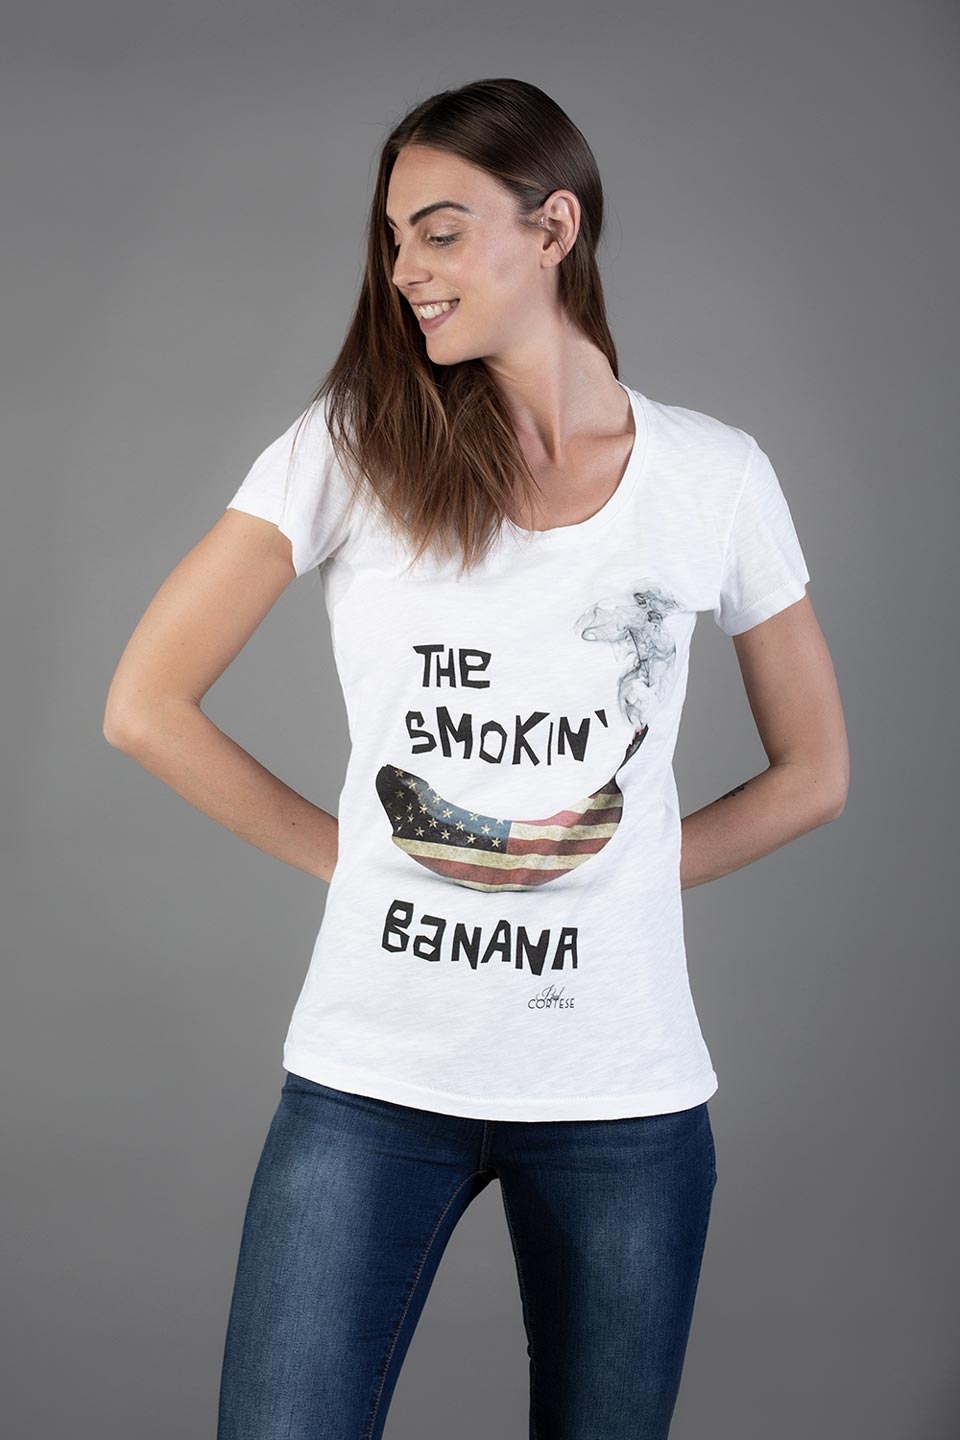 The Smokin' Banana